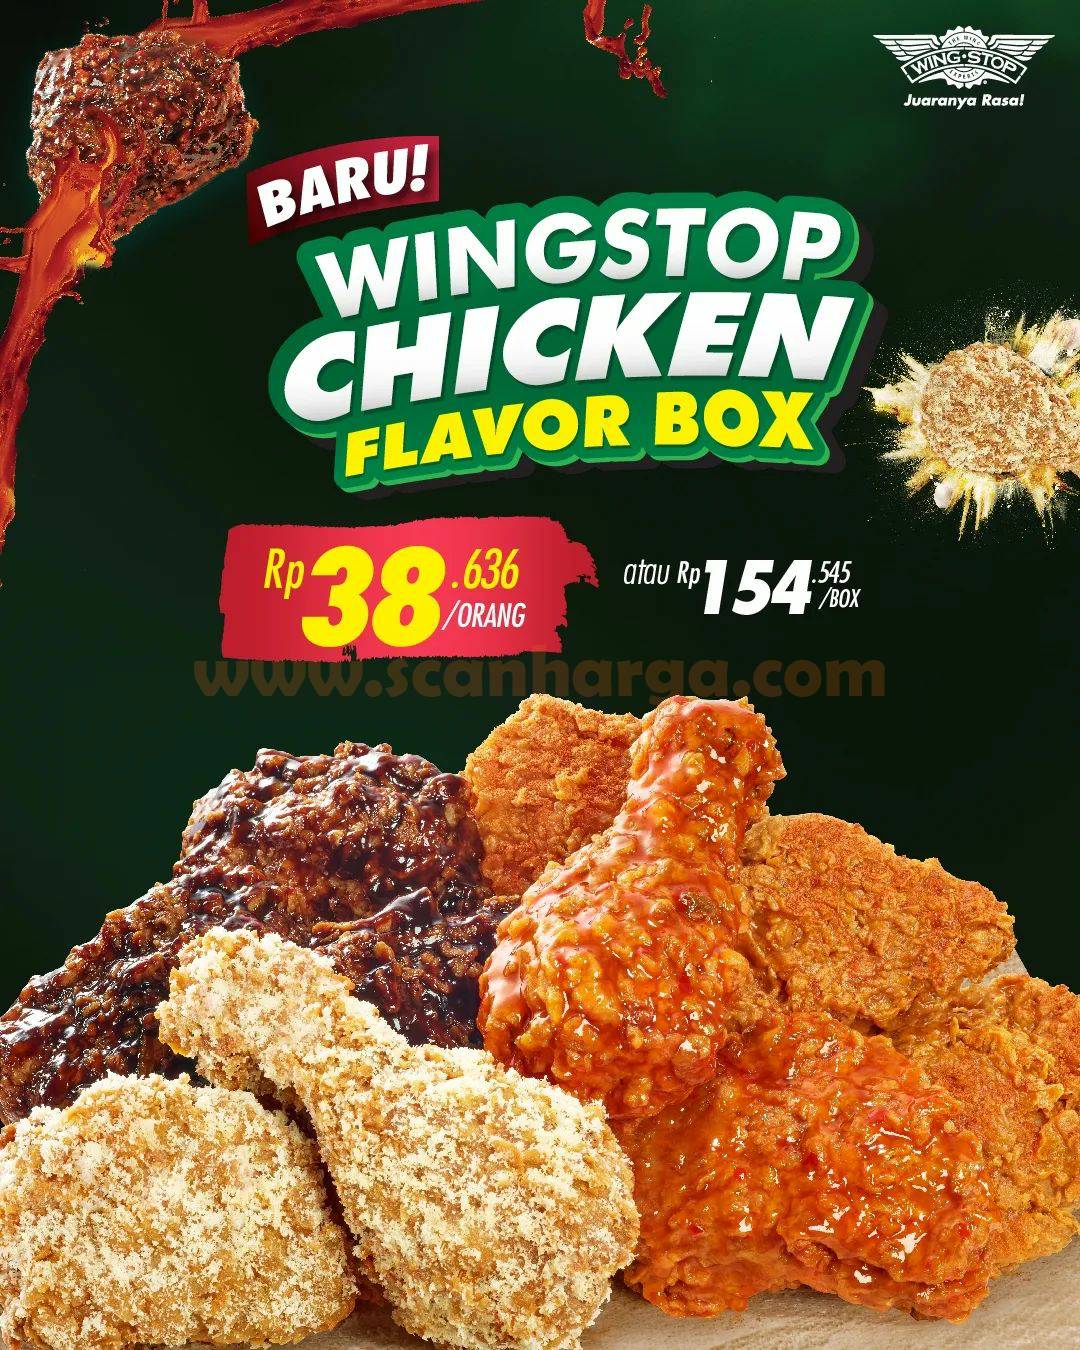 Promo WINGSTOP CHICKEN FLAVOR BOX BARU – Mulai Rp. 38.636*